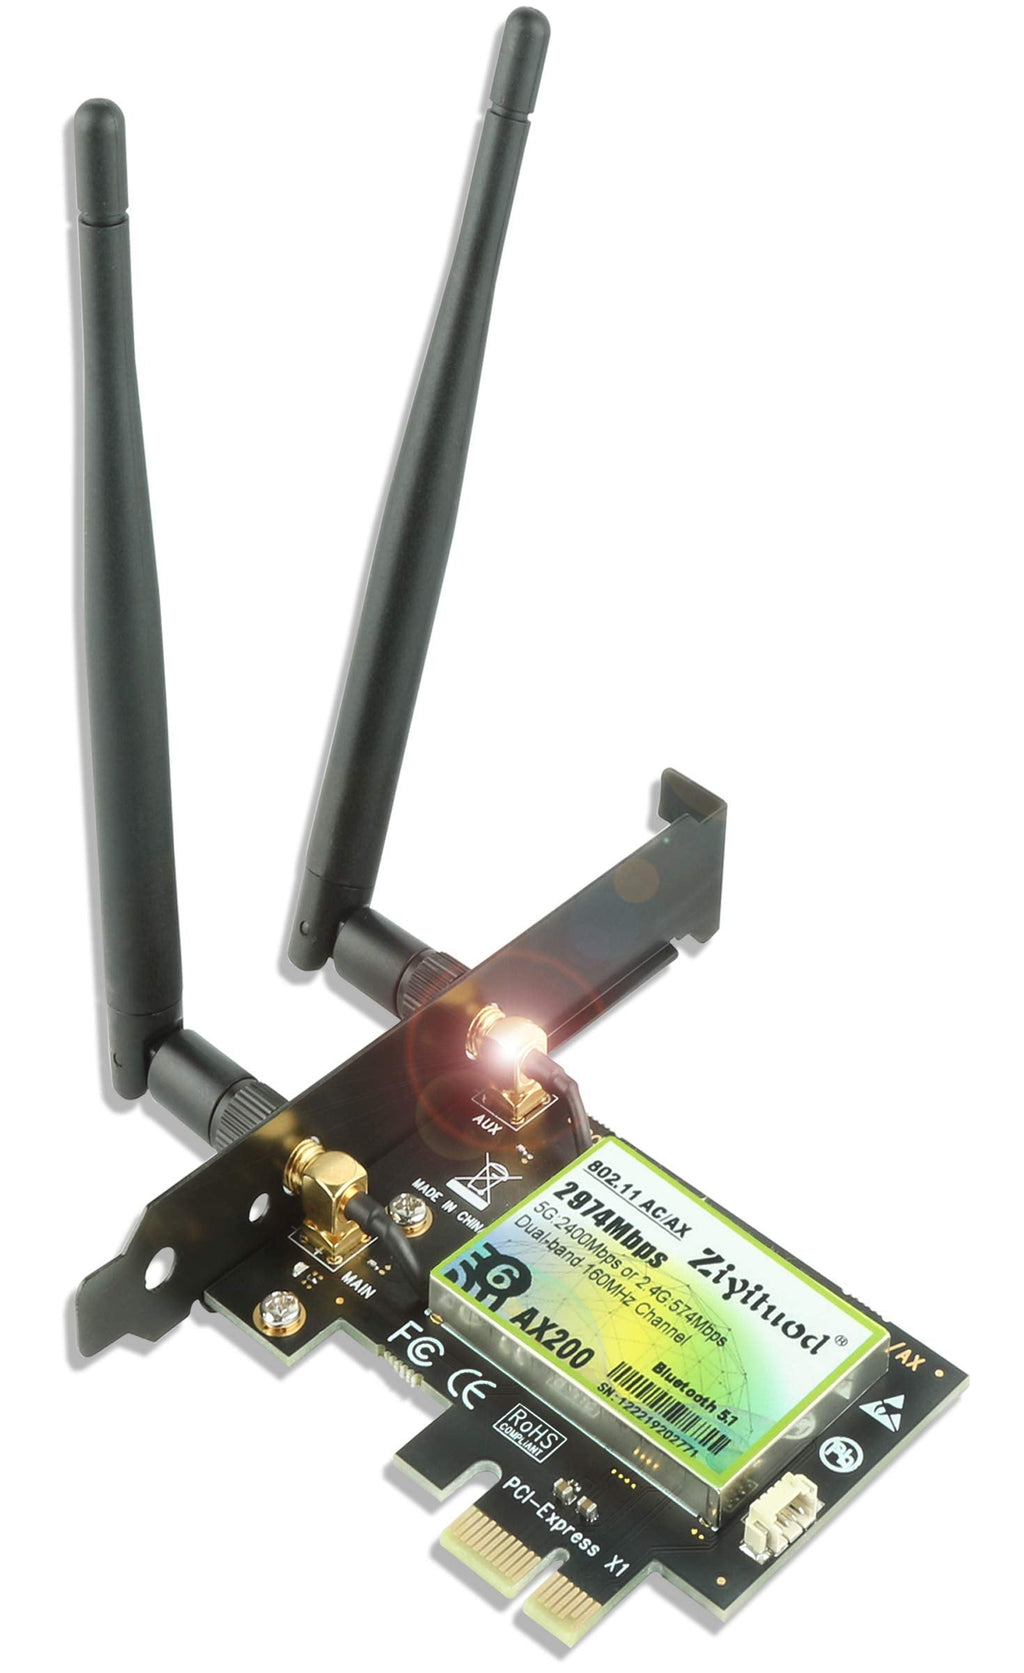  [AUSTRALIA] - ZYT 3000Mbps PCIe WiFi Card with Bluetooth5.1 for Desktop PC | Intel WiFi 6 AX200 | 5G 2.4G WiFi Bluetooth Card with 160MHz,OFDMA,MU-MIMO | Support Windows 10/11